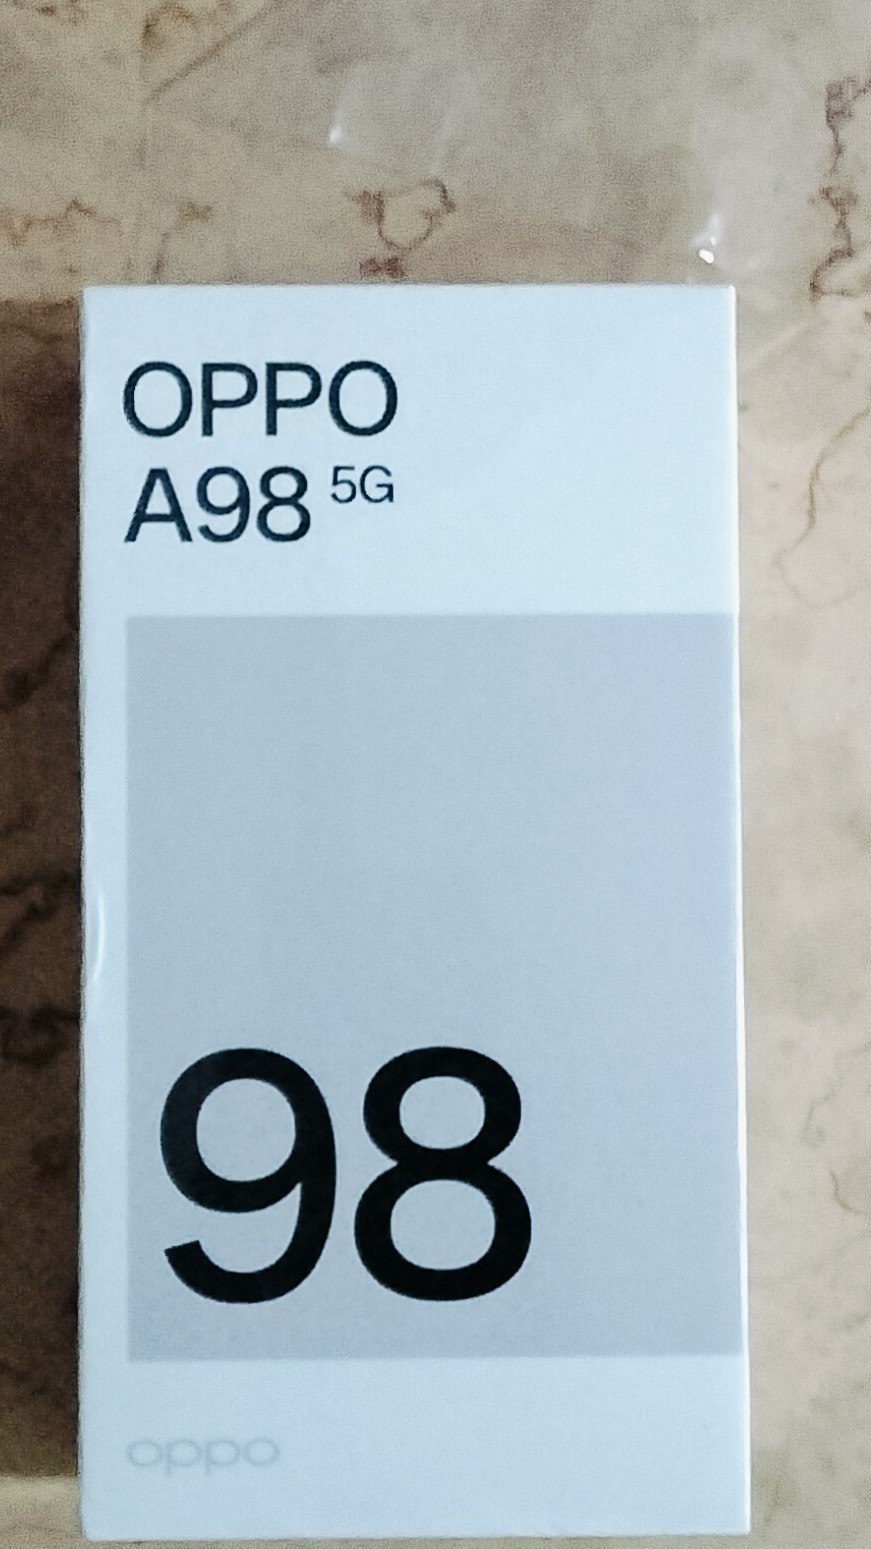 Oppo A98 5g